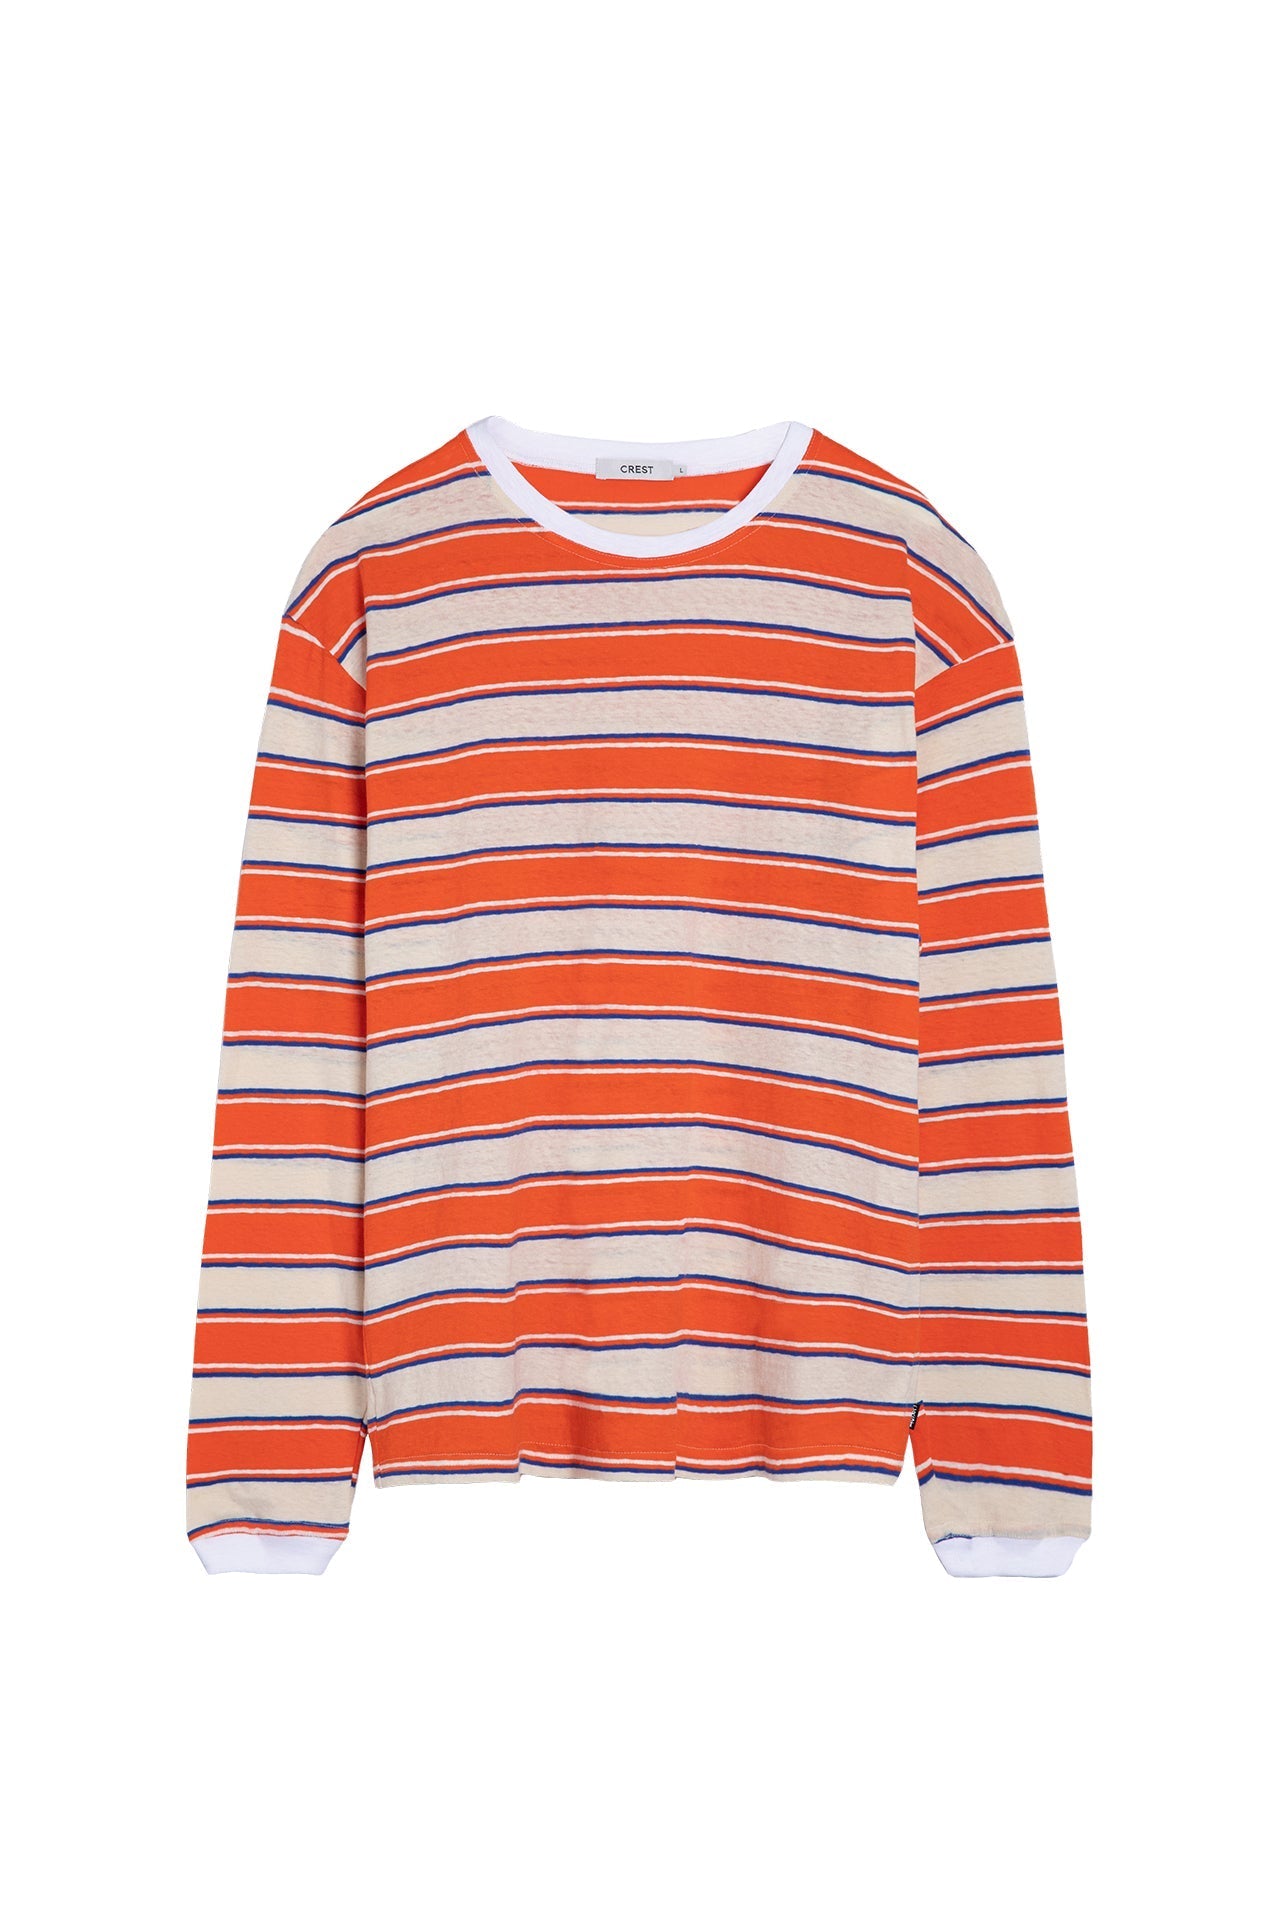 CREST - Border Long Sleeves T-Shirt | Orange Stripes